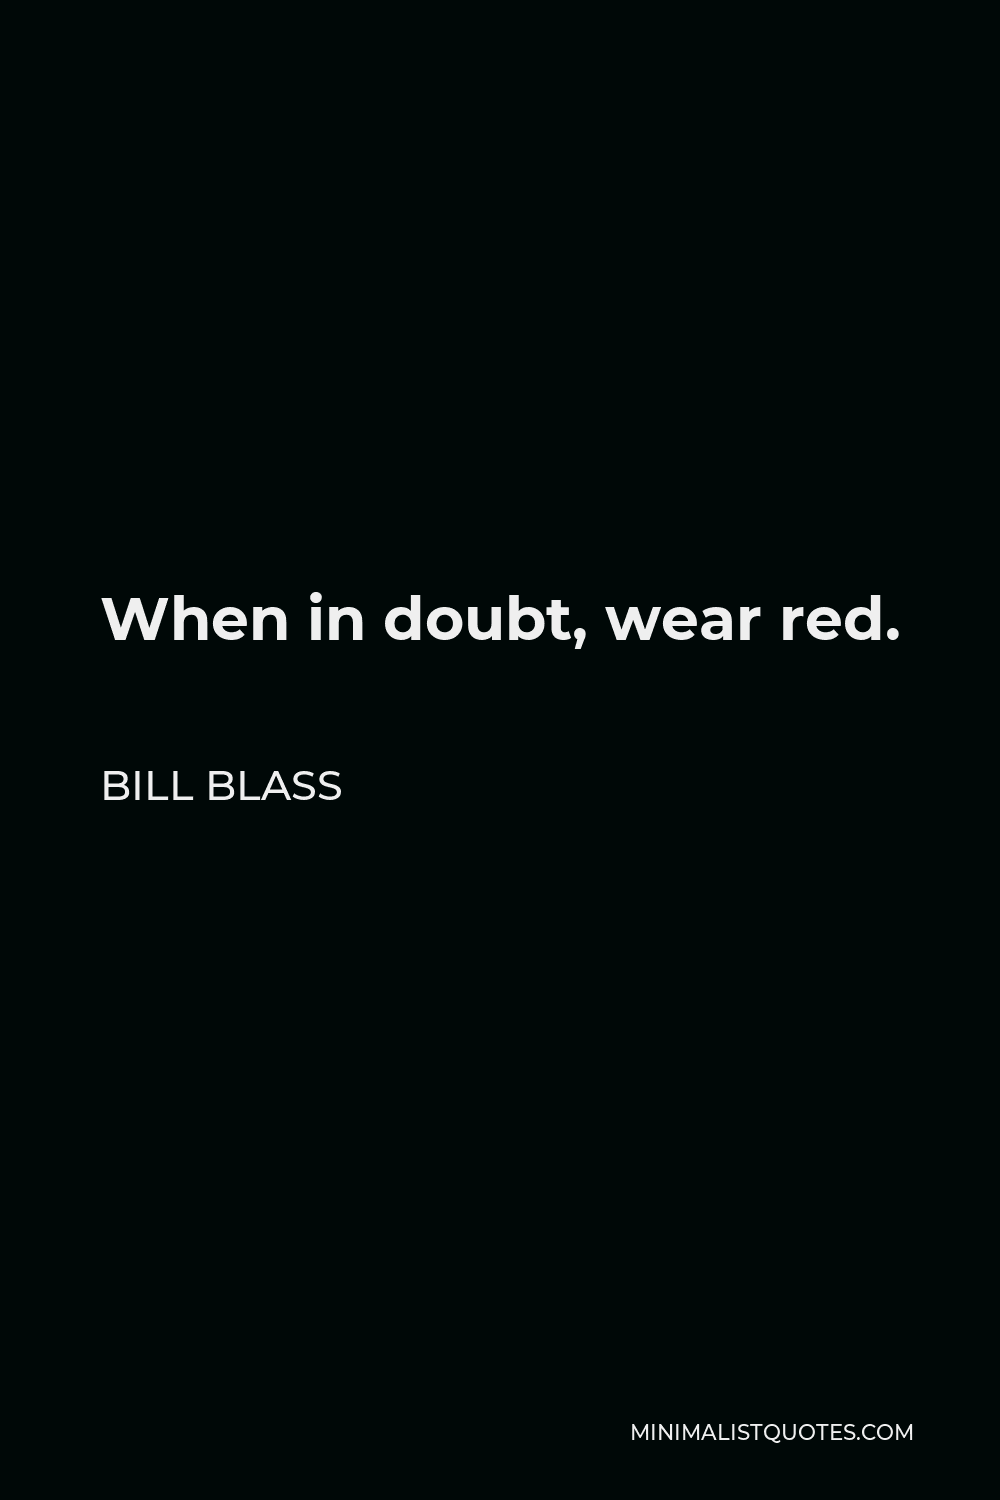 Bill Blass Quote - When in doubt, wear red.